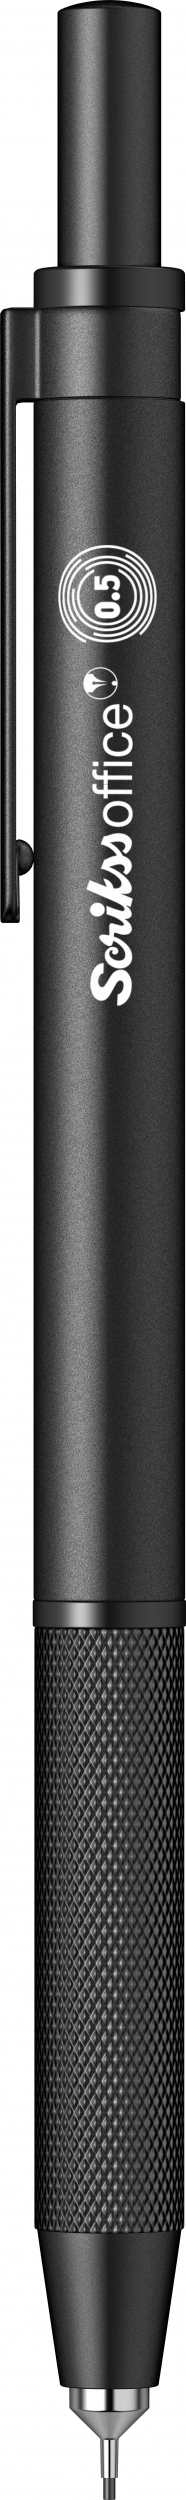 Механичен молив Twist Scrikss 0,5мм., модел 87425, Черен